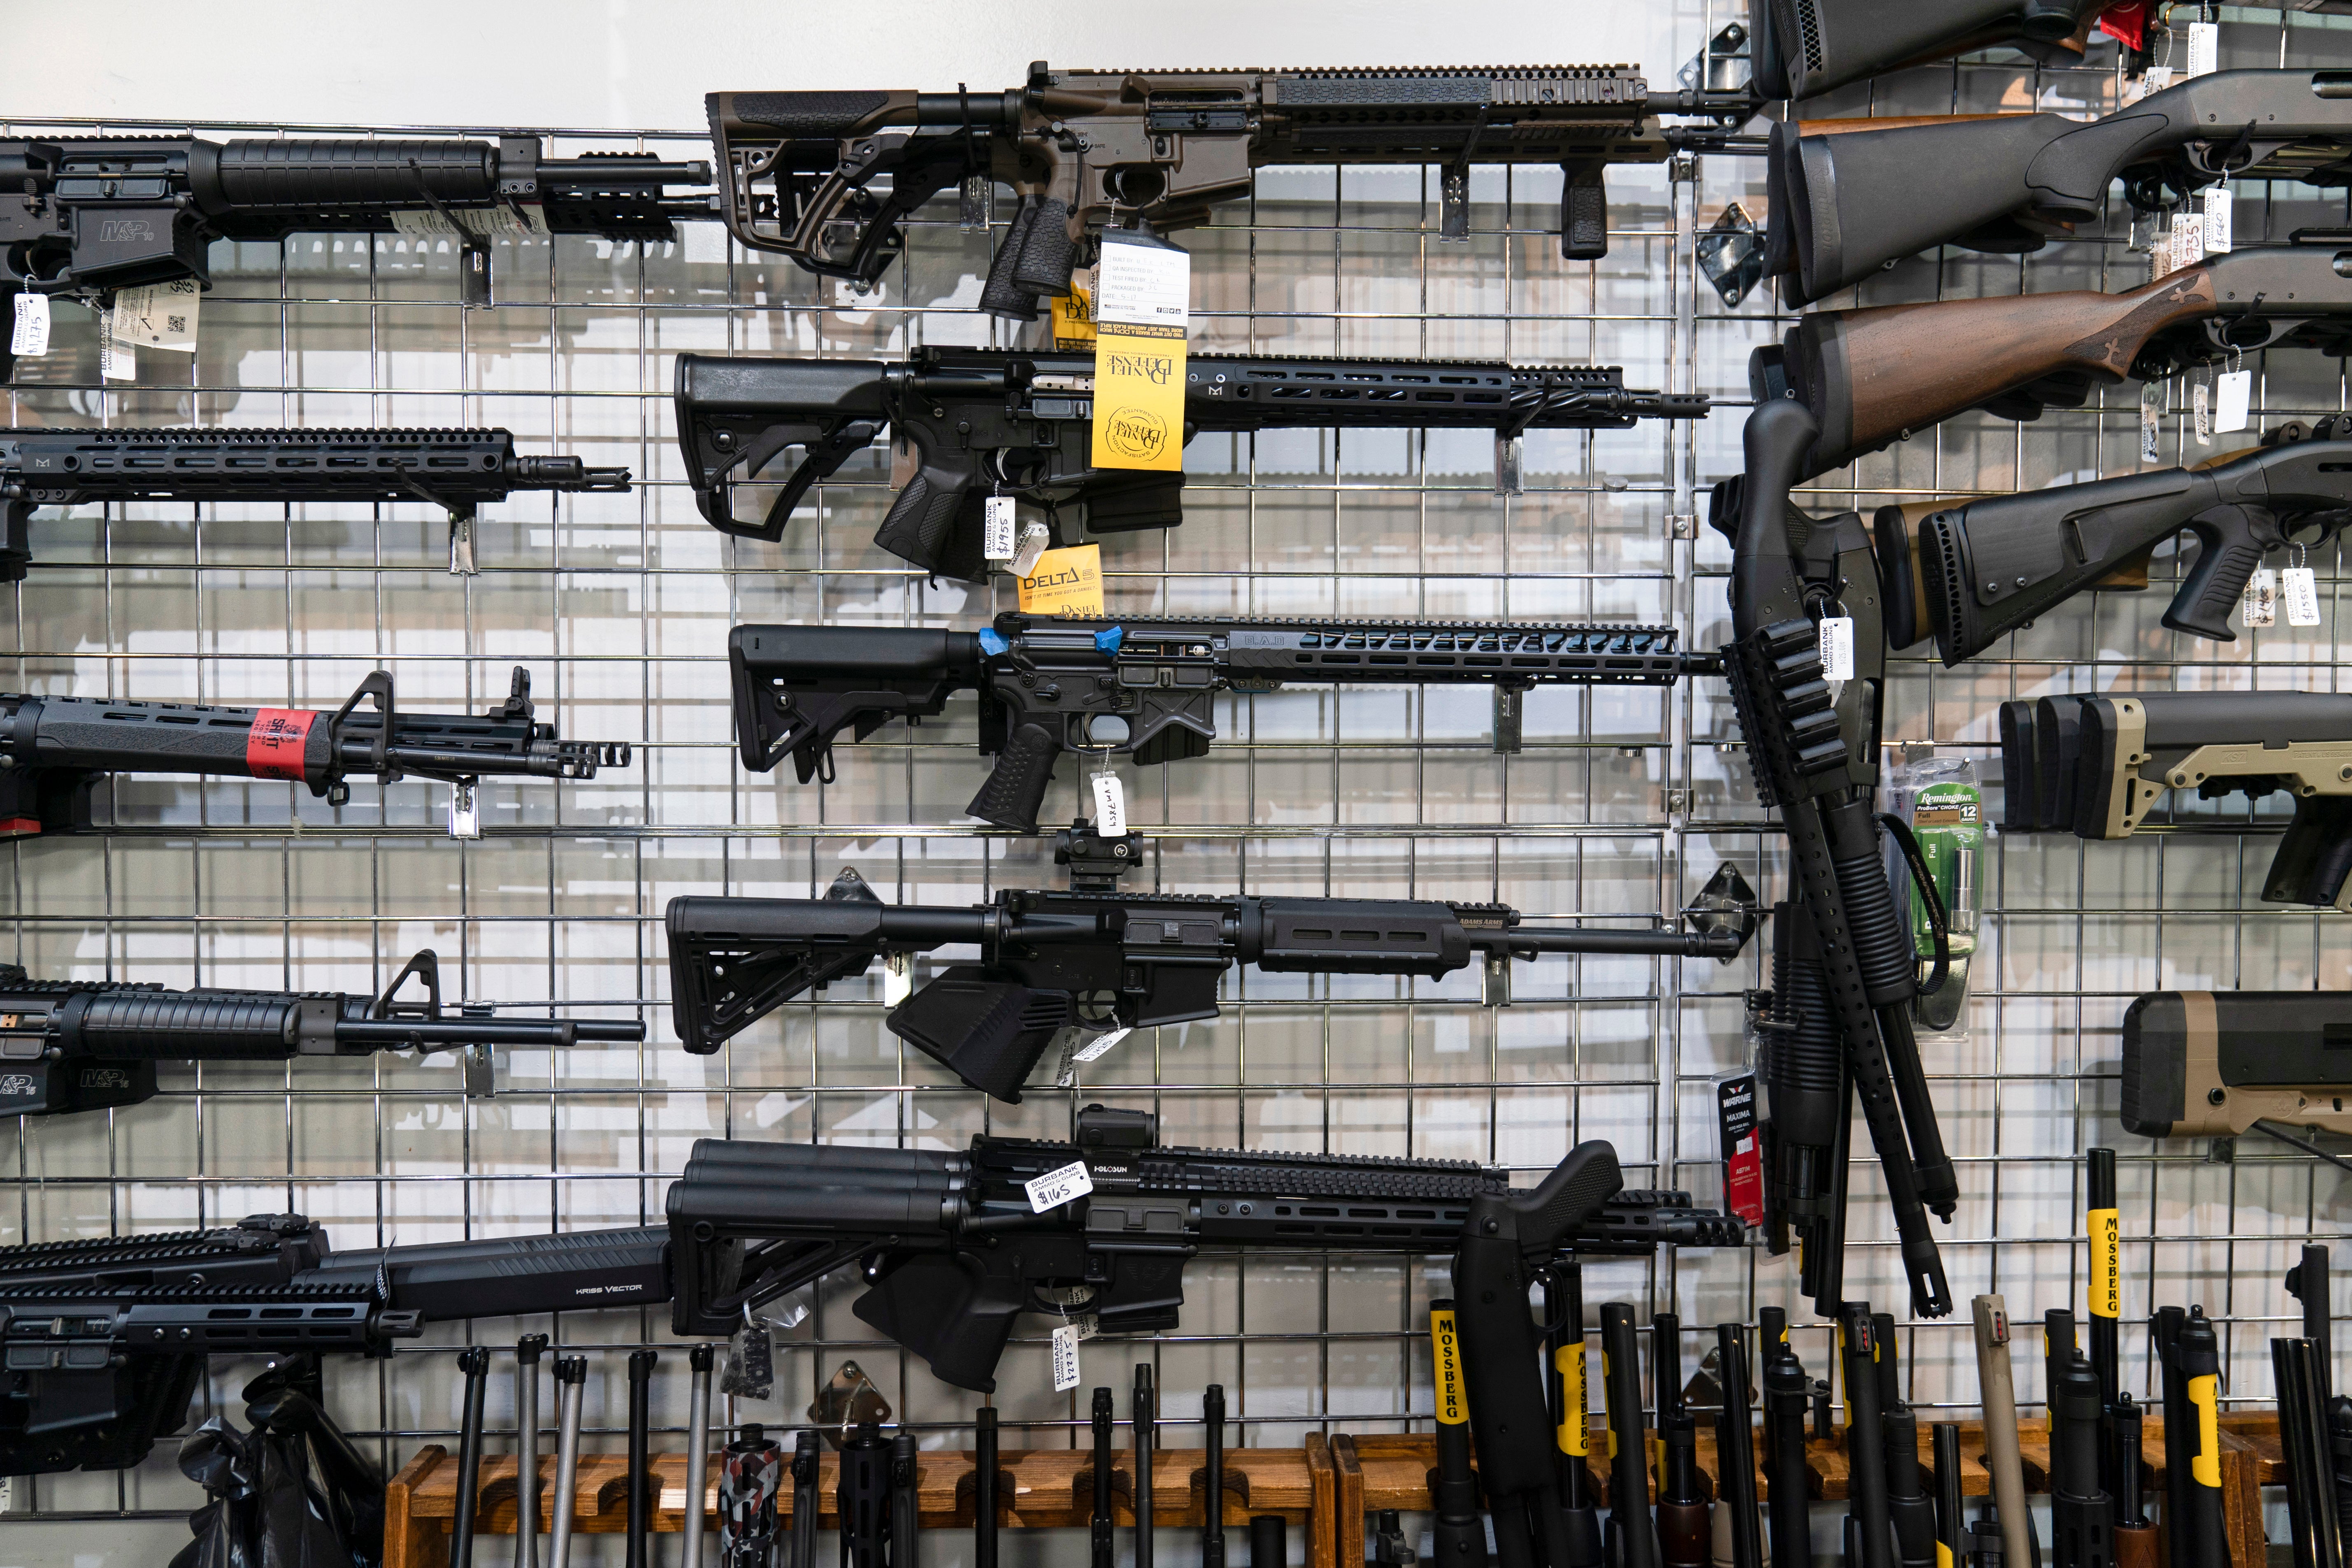 AR-15-style rifles are on display at Burbank Ammo & Guns in Burbank, California